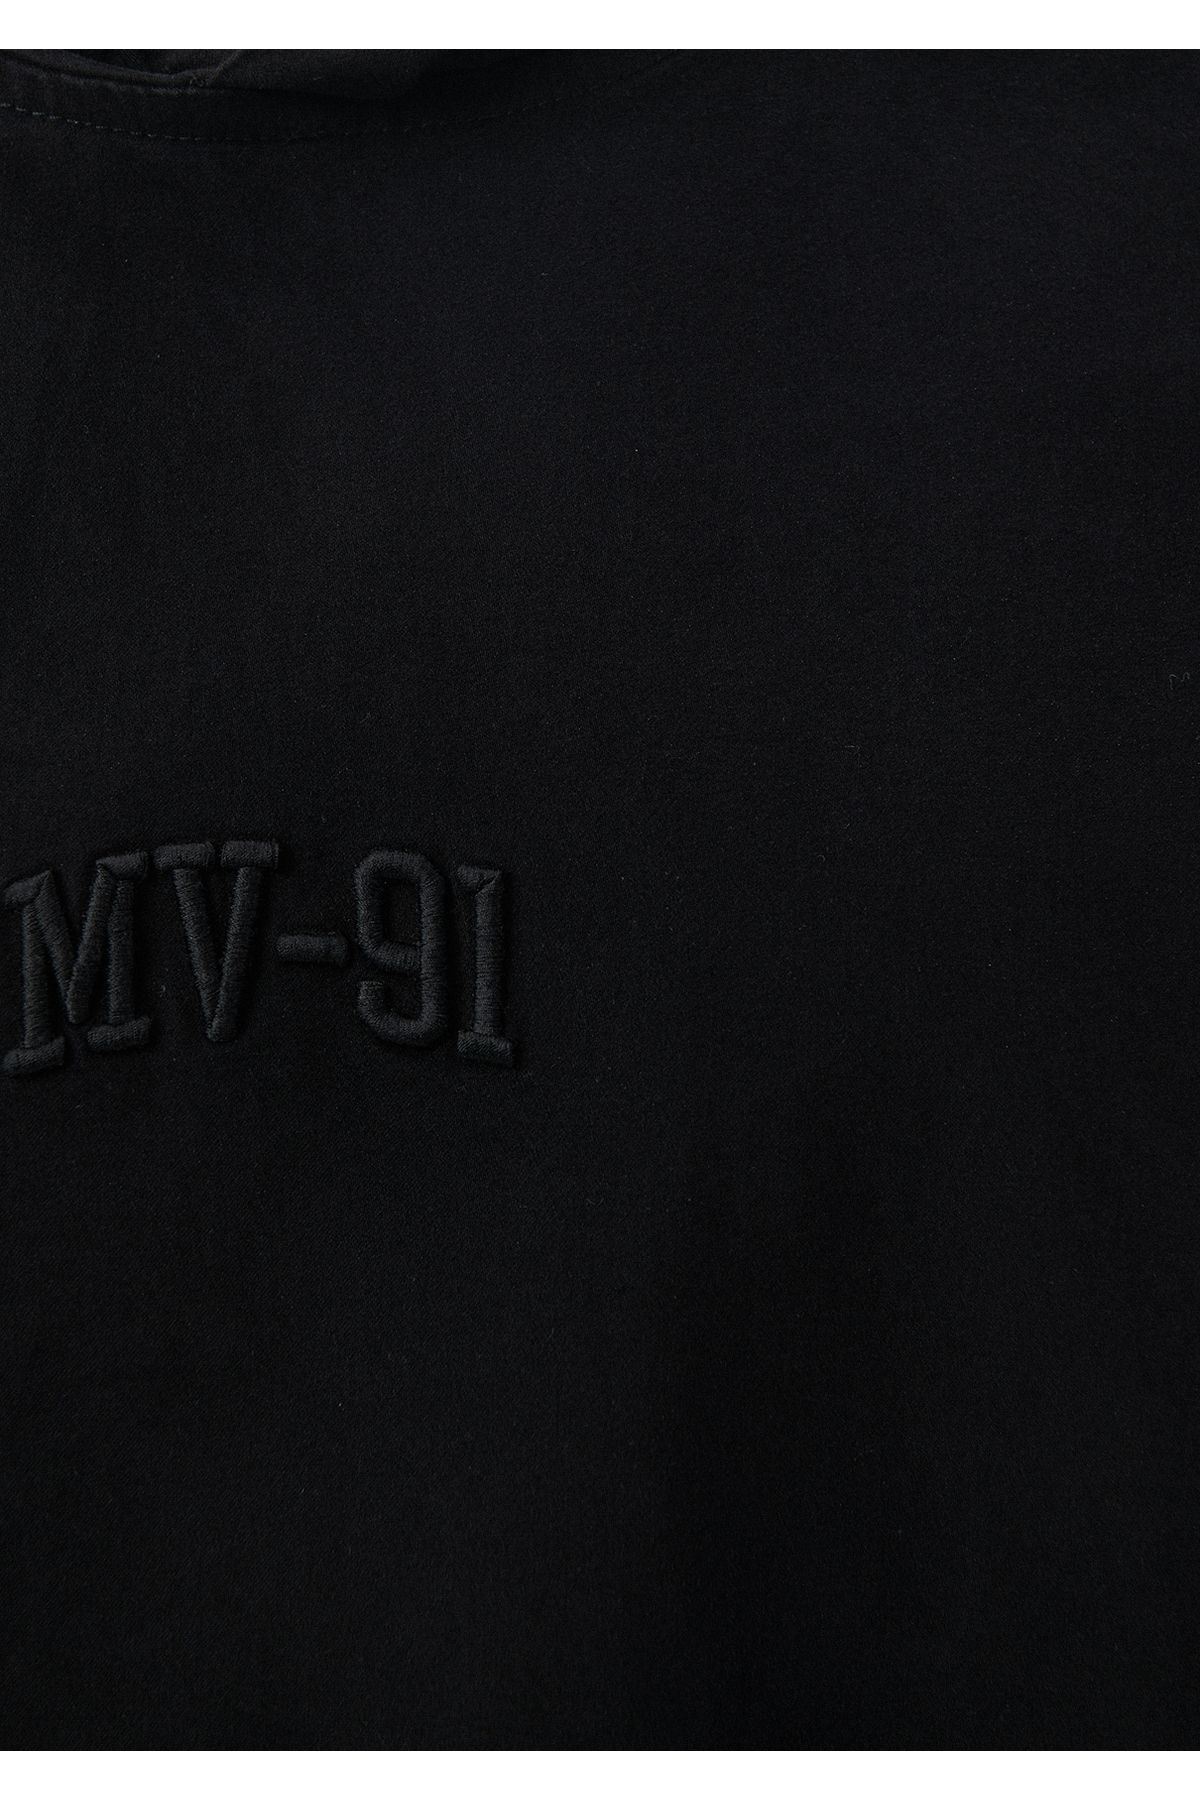 Mavi MV91 پیراهن سیاه گلدوزی شده 0210787-900